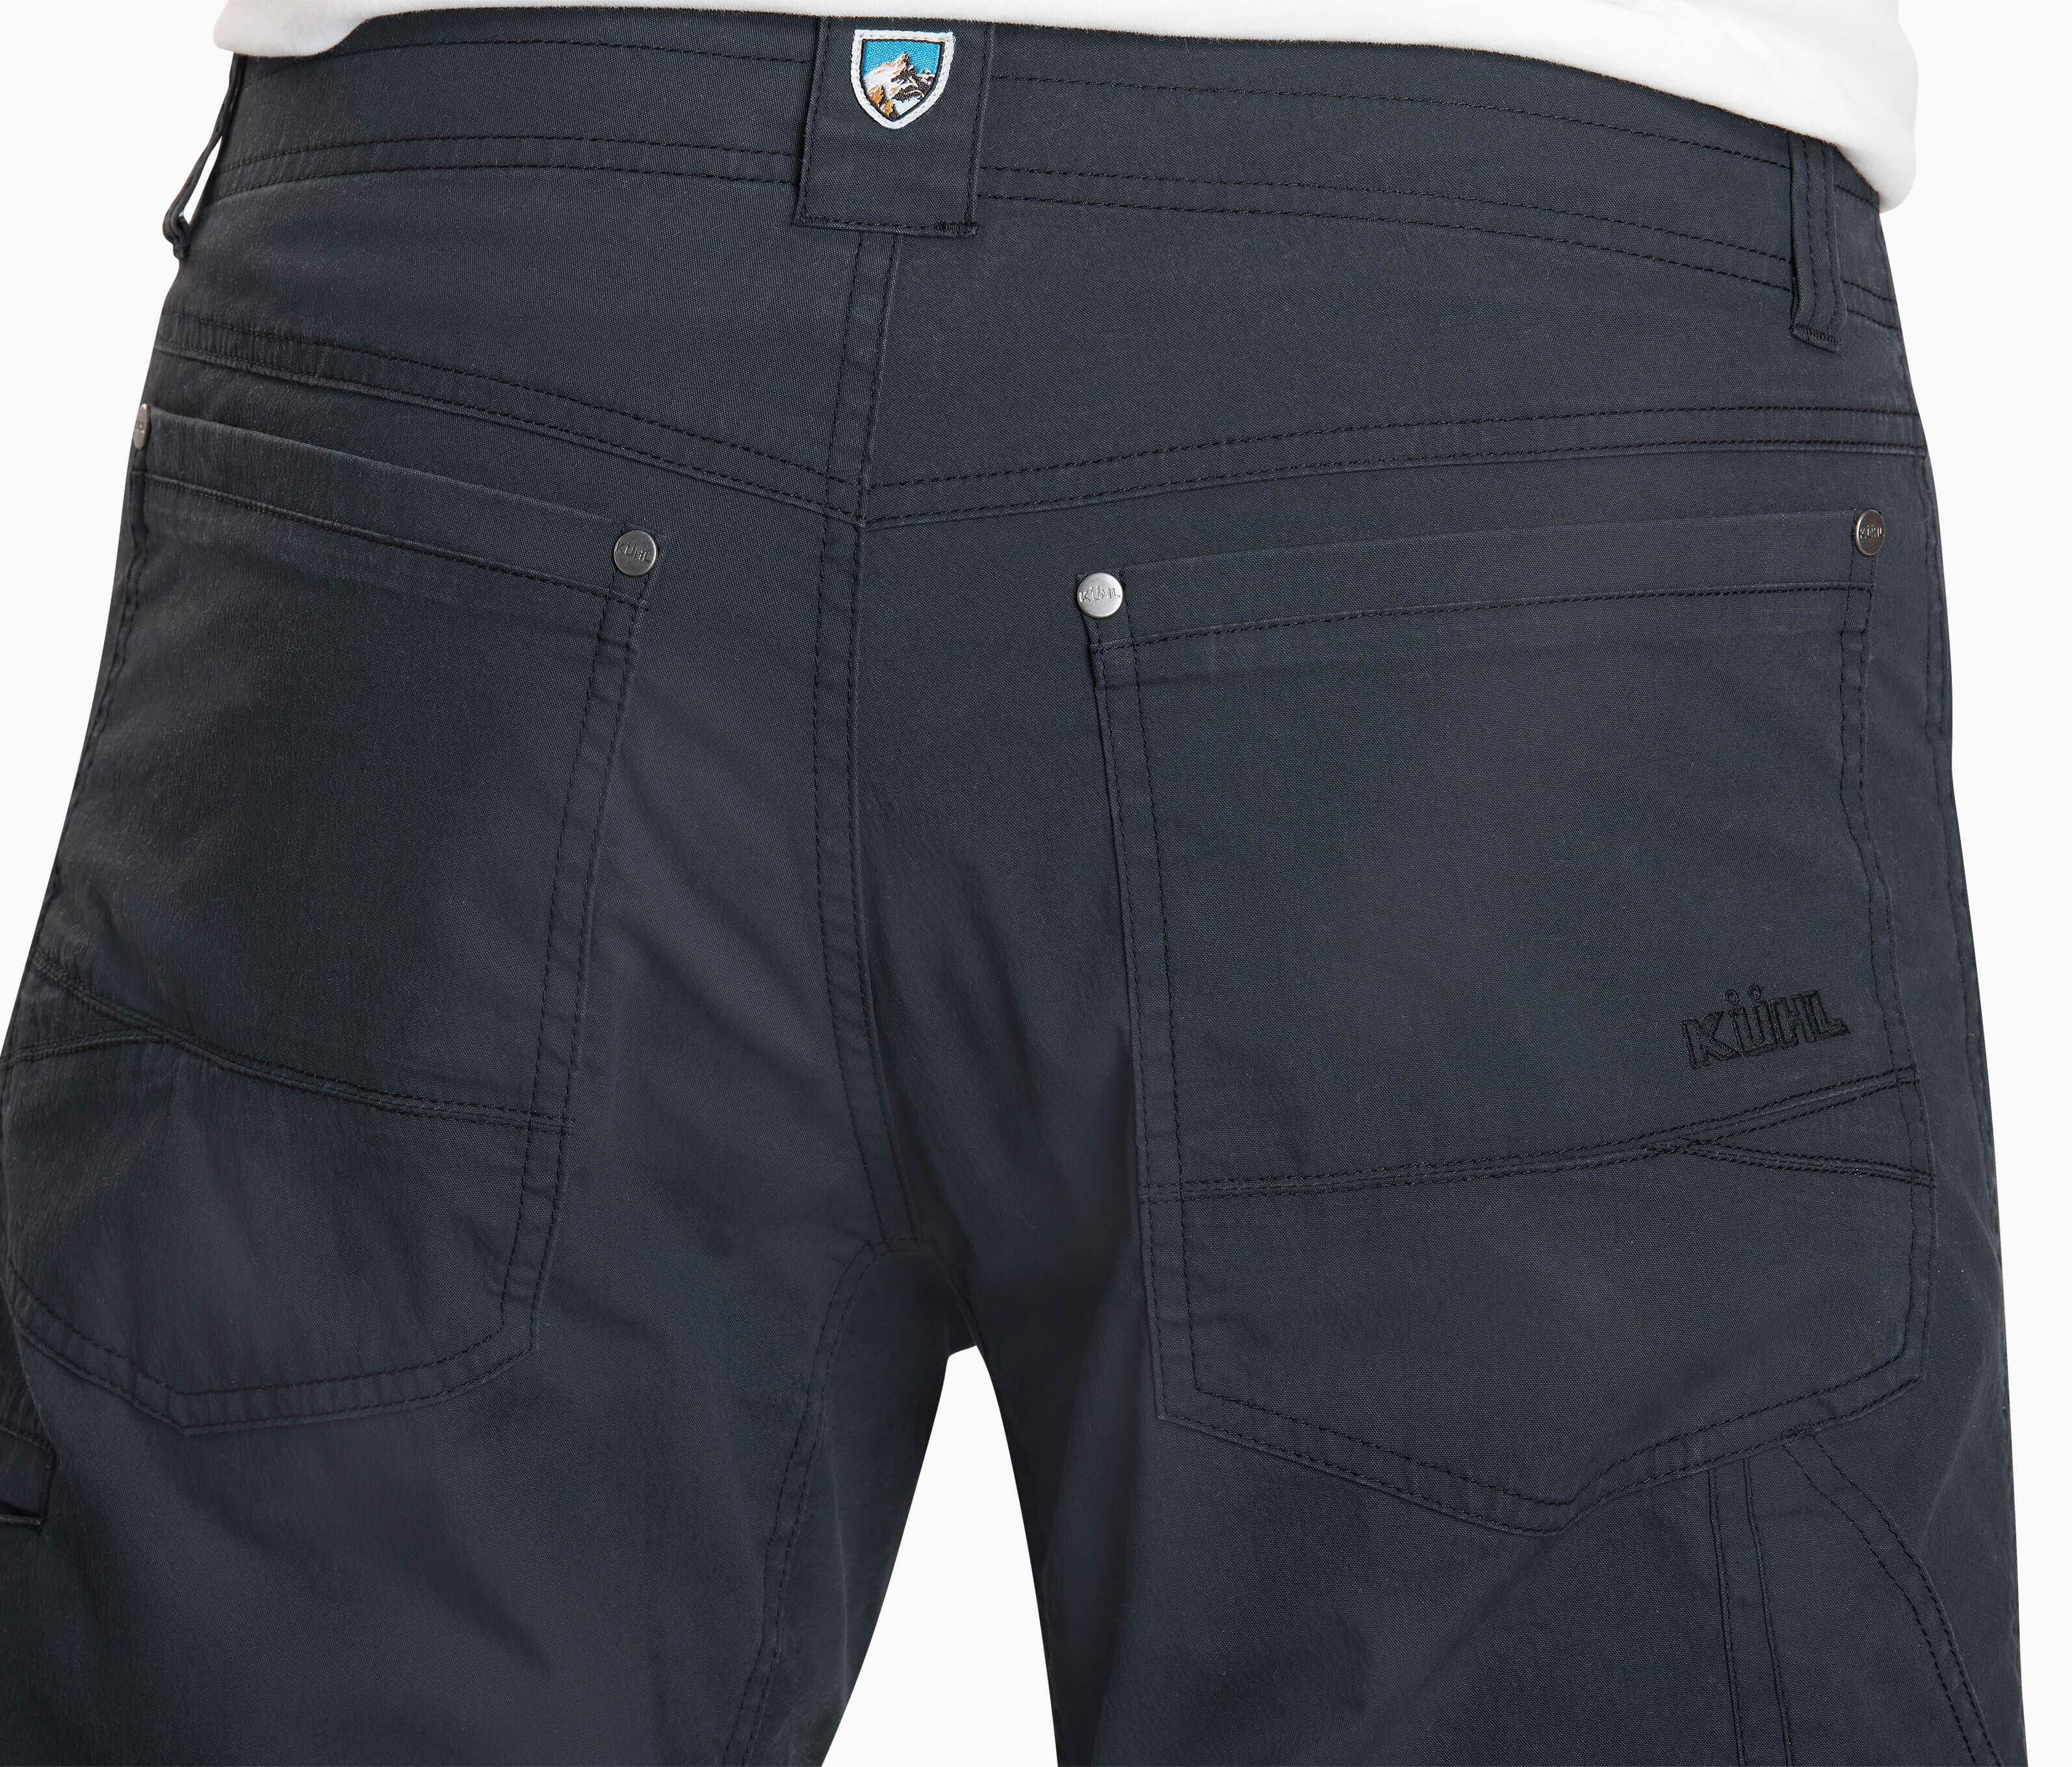 Kultivatr Kargo Crop - Jeans/Pants & Shorts, Kuhl